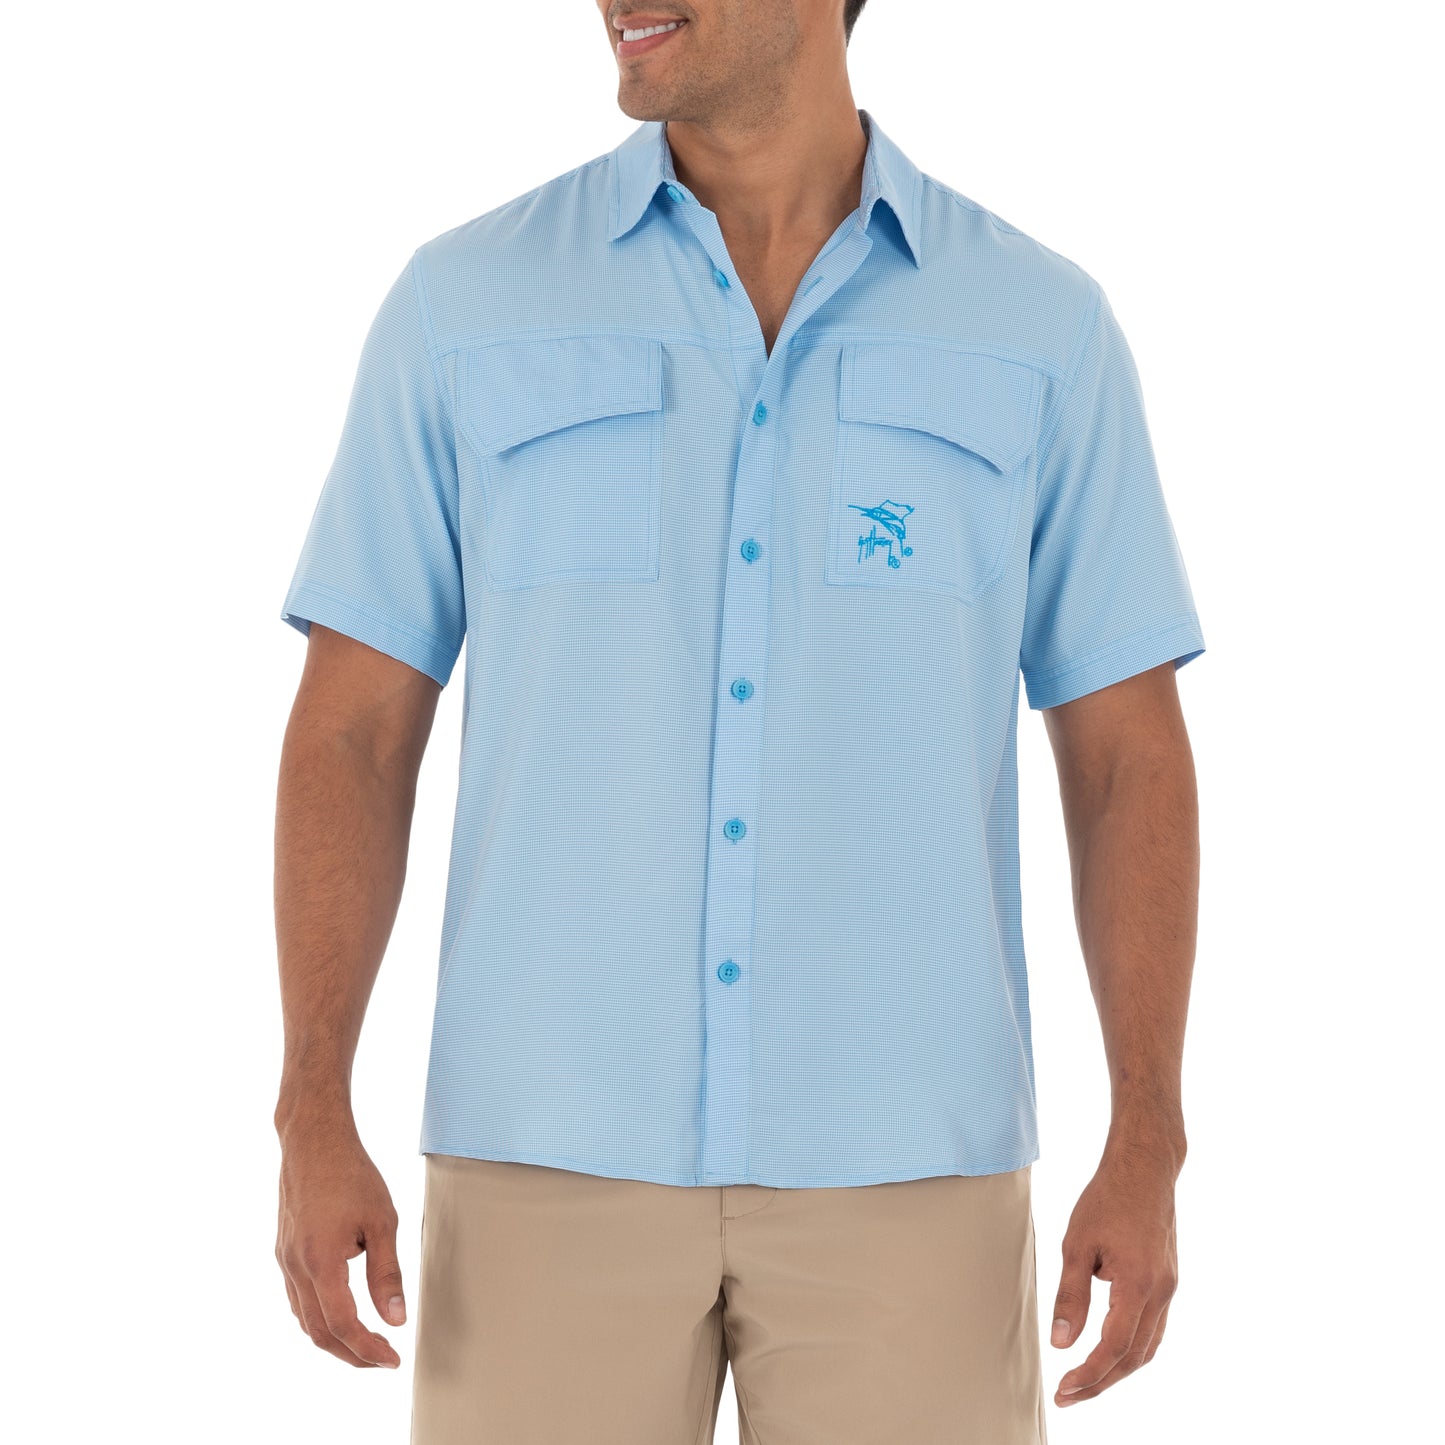 Guy Harvey | Men's Short Sleeve Texture Gingham Blue Performance Fishing Shirt, Medium